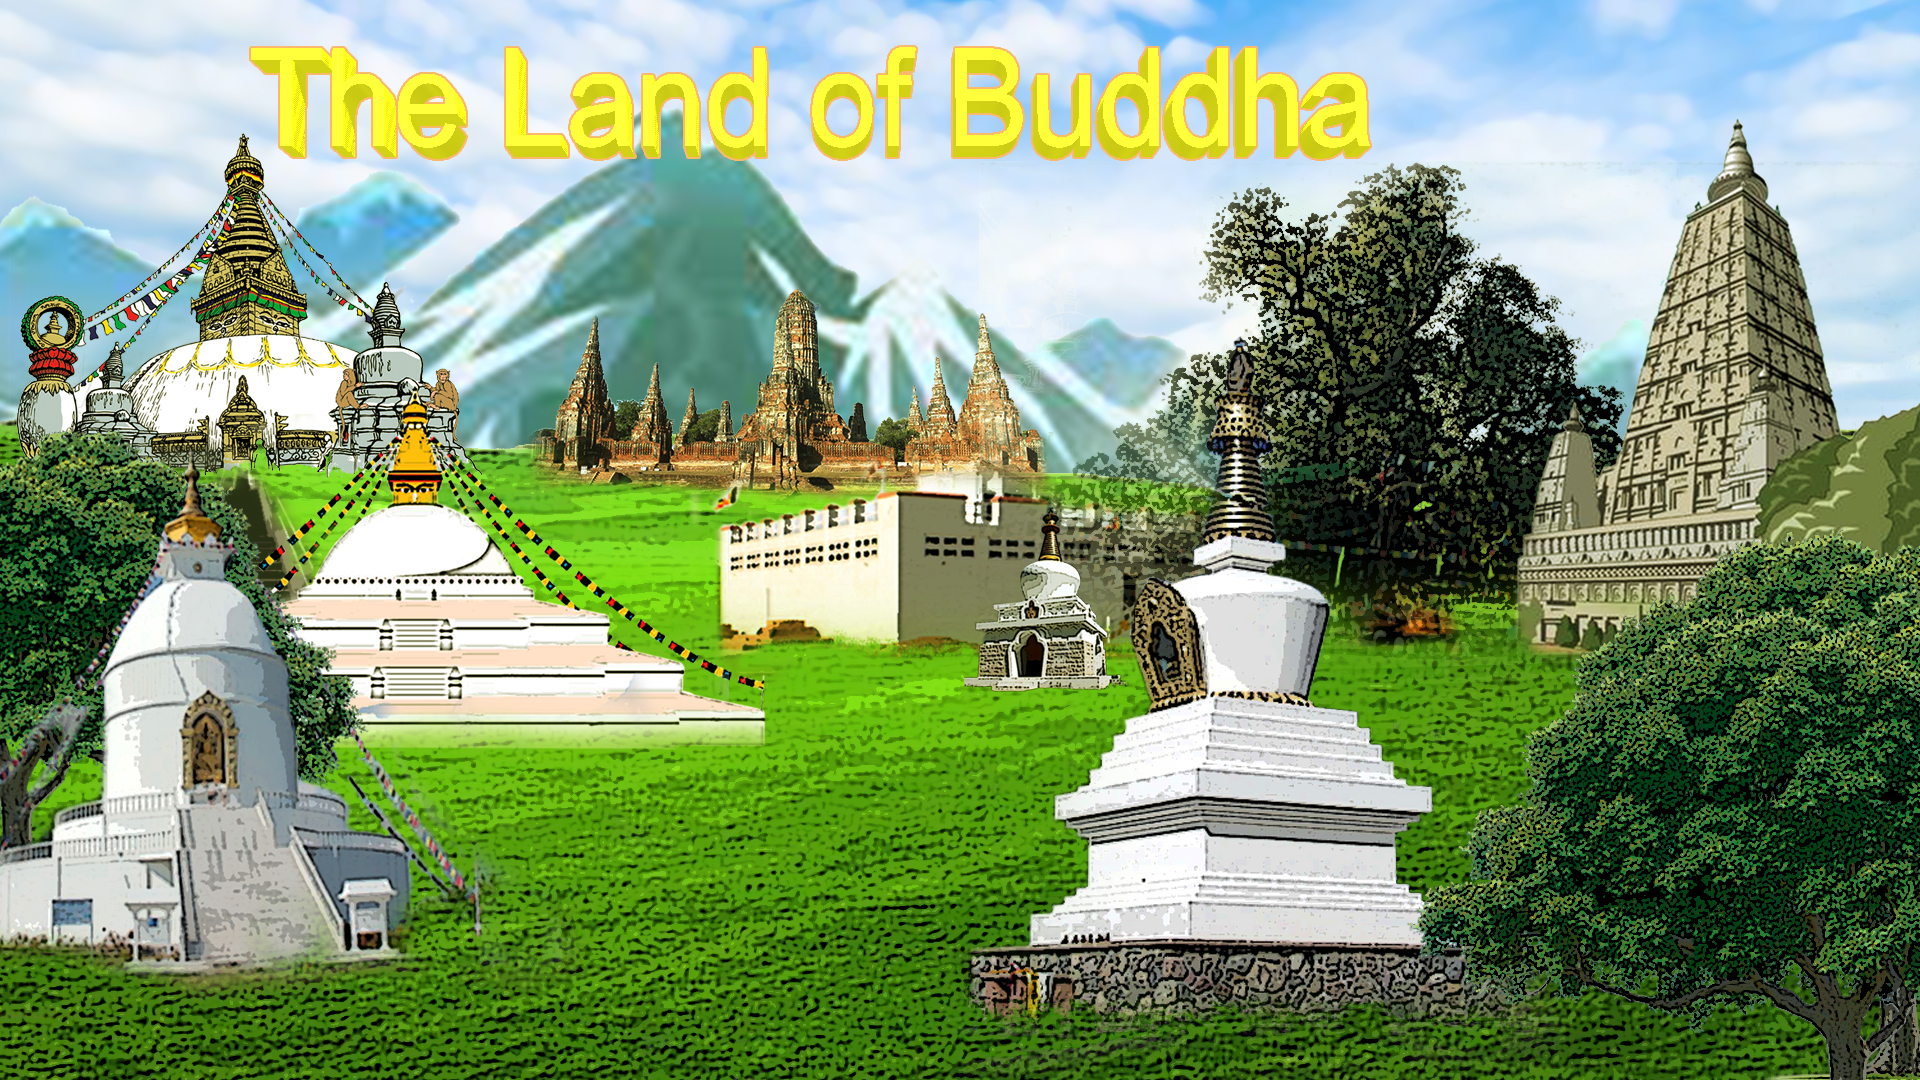 The Land of Buddha